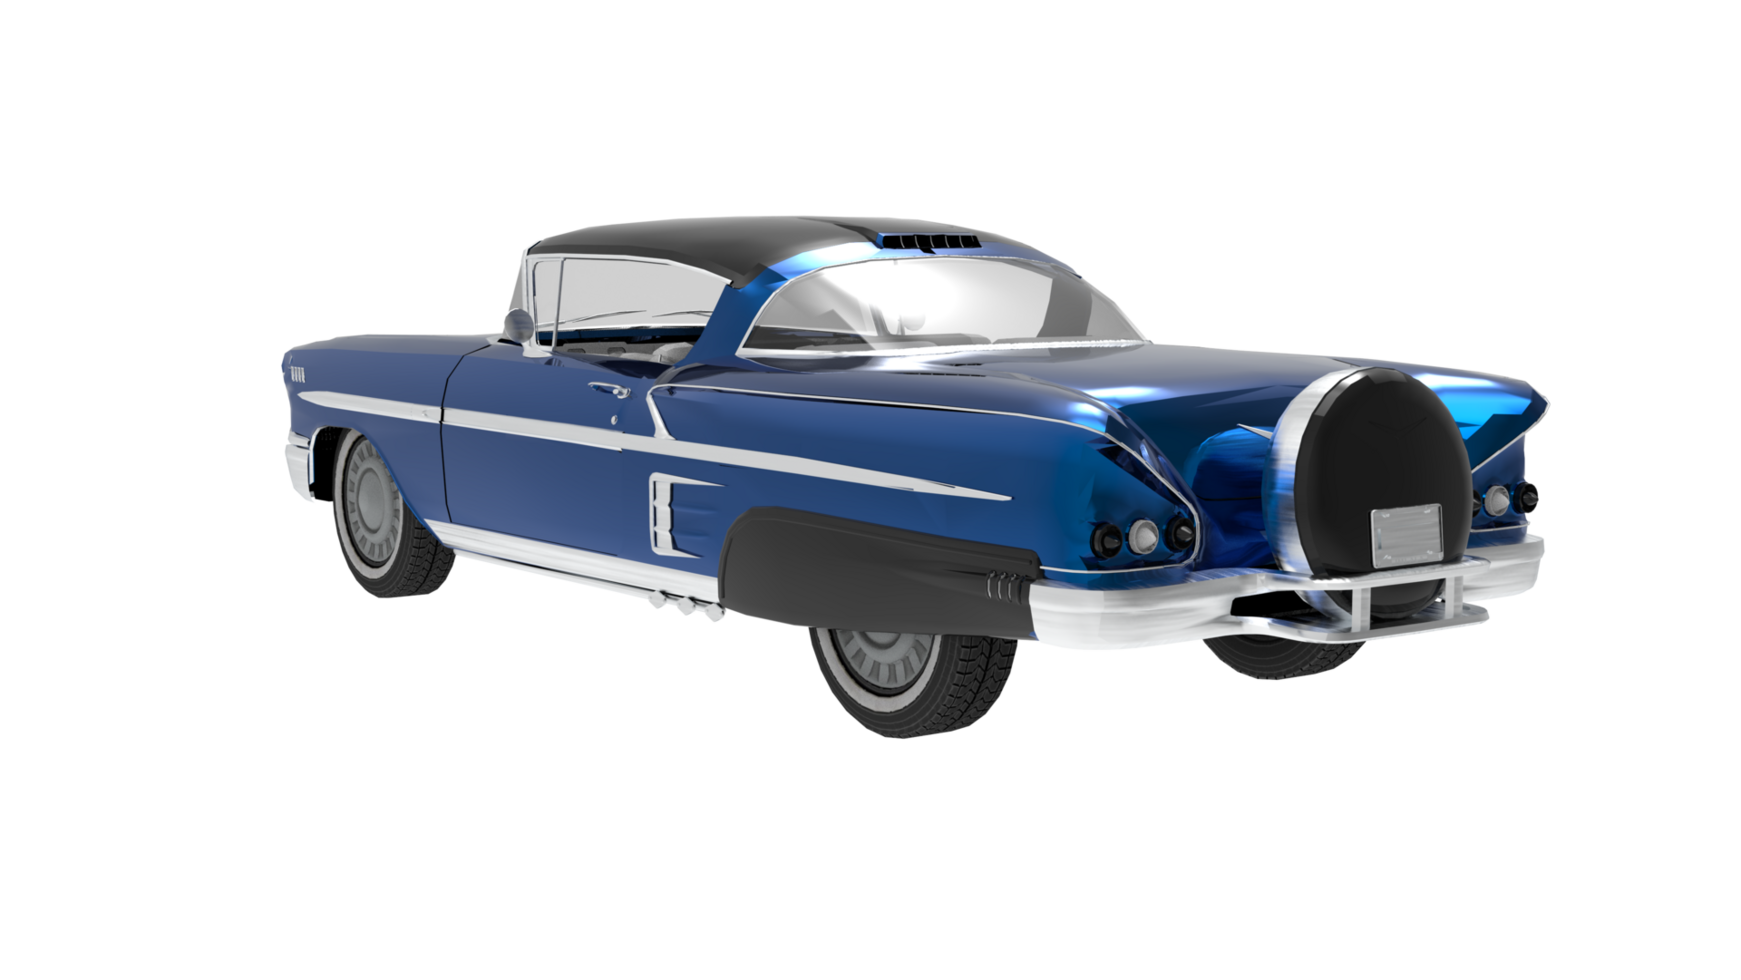 azul clássico vintage carro png